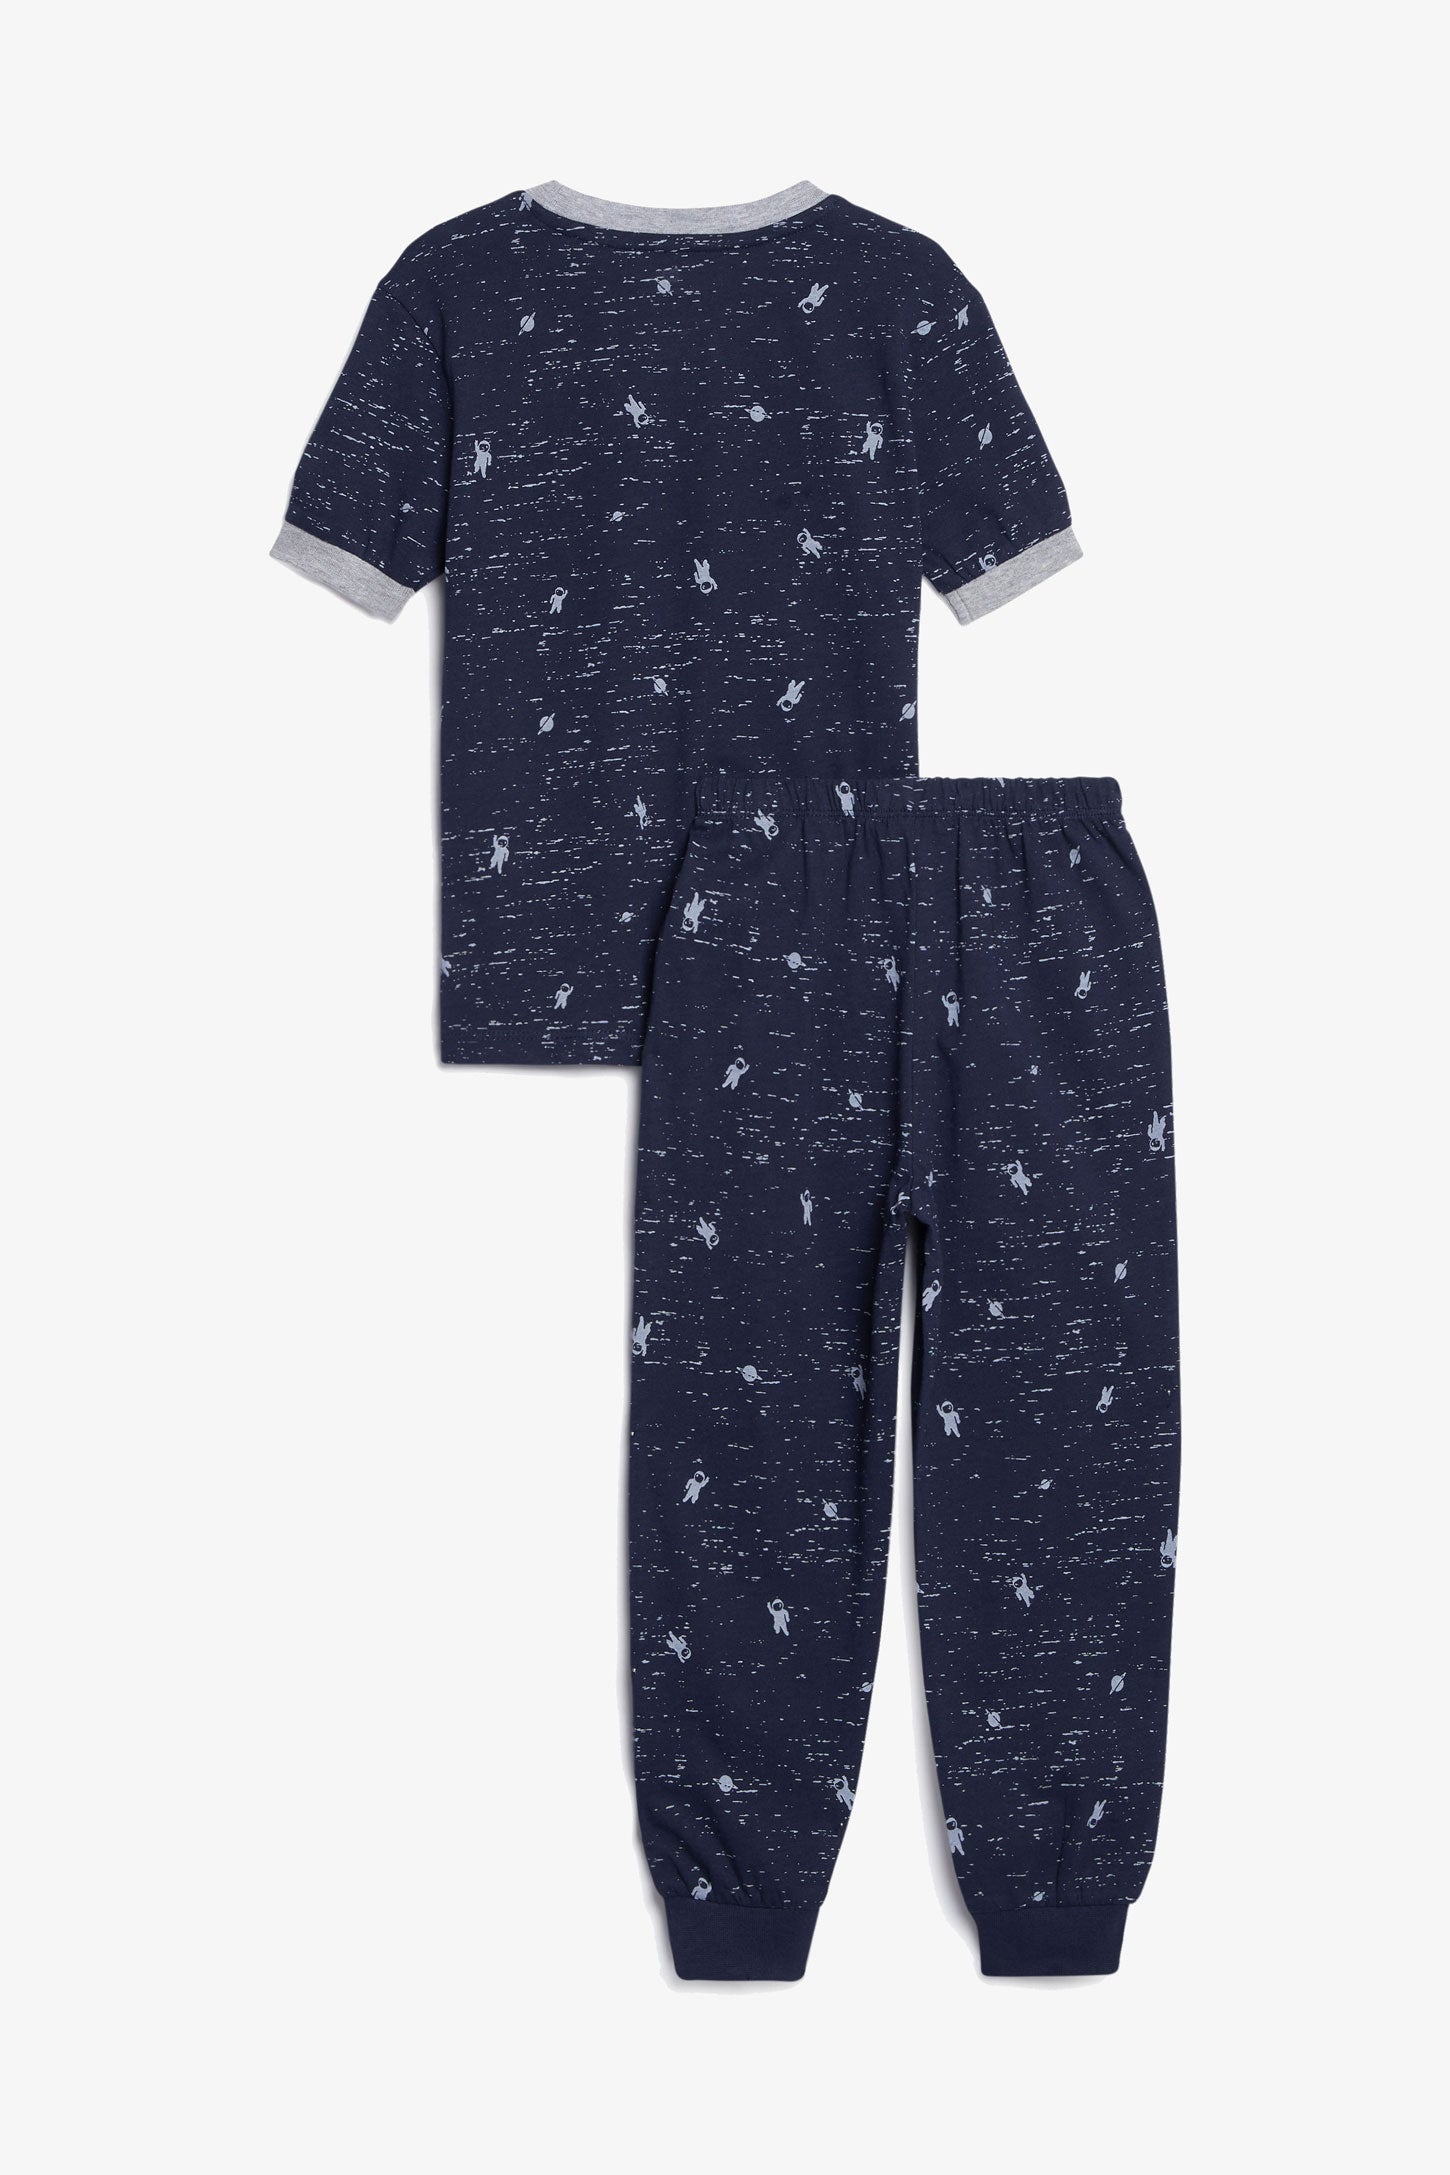 Pyjama 2-pièces en coton, 2/35$ - Enfant garçon && MARIN/MULTI